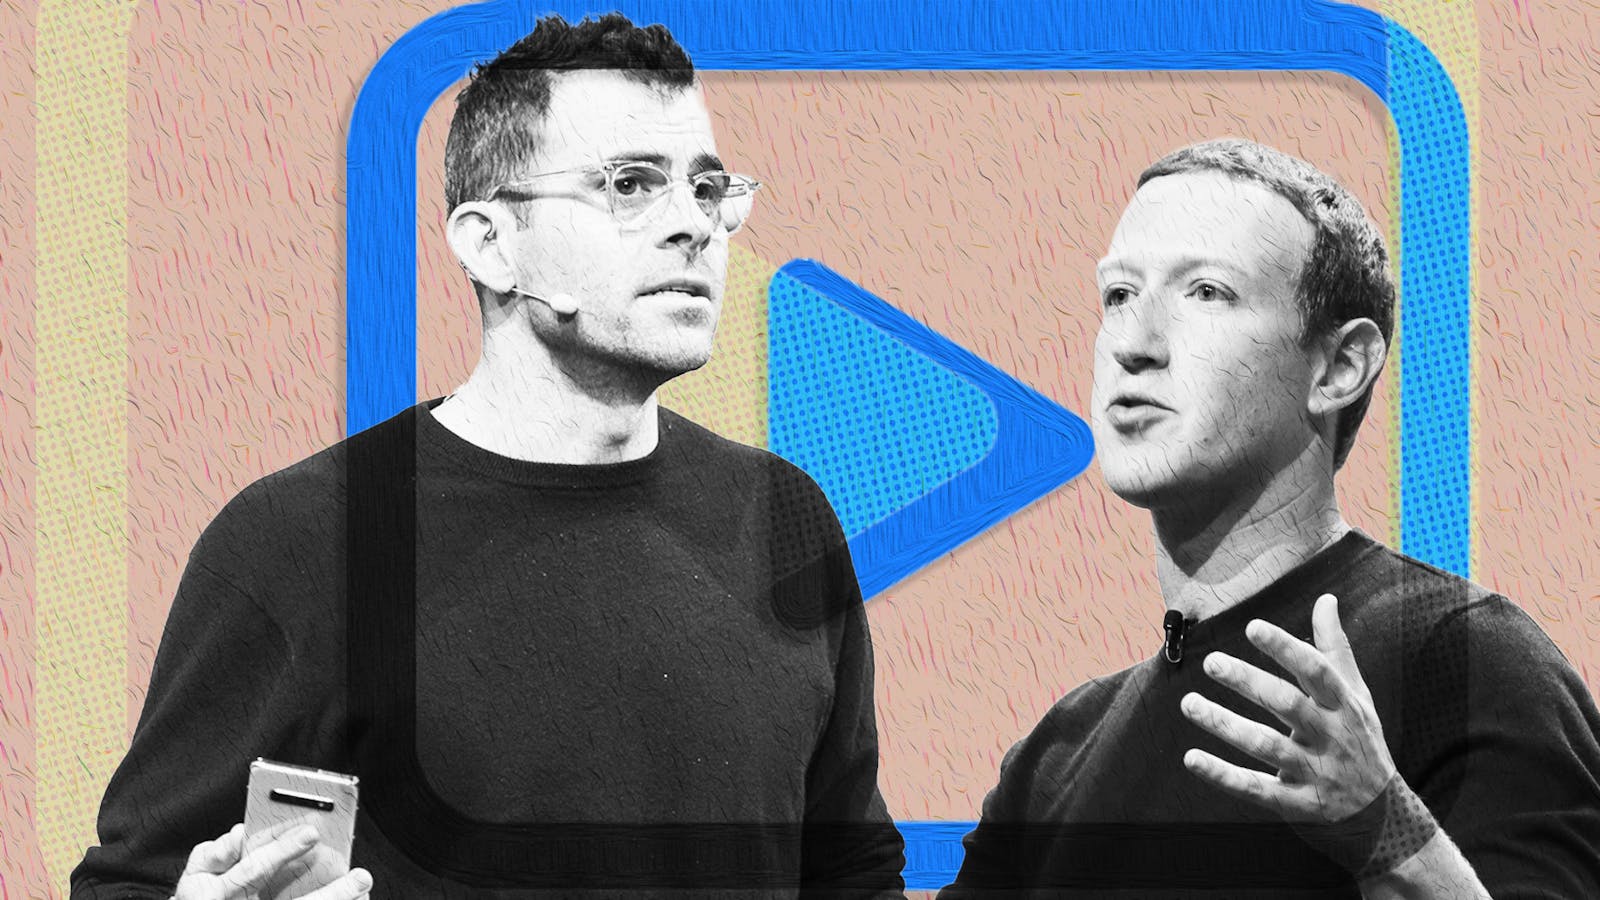 Instagram head Adam Mosseri, left, and Meta Platforms CEO Mark Zuckerberg. Photos by Bloomberg; art by Mike Sullivan.